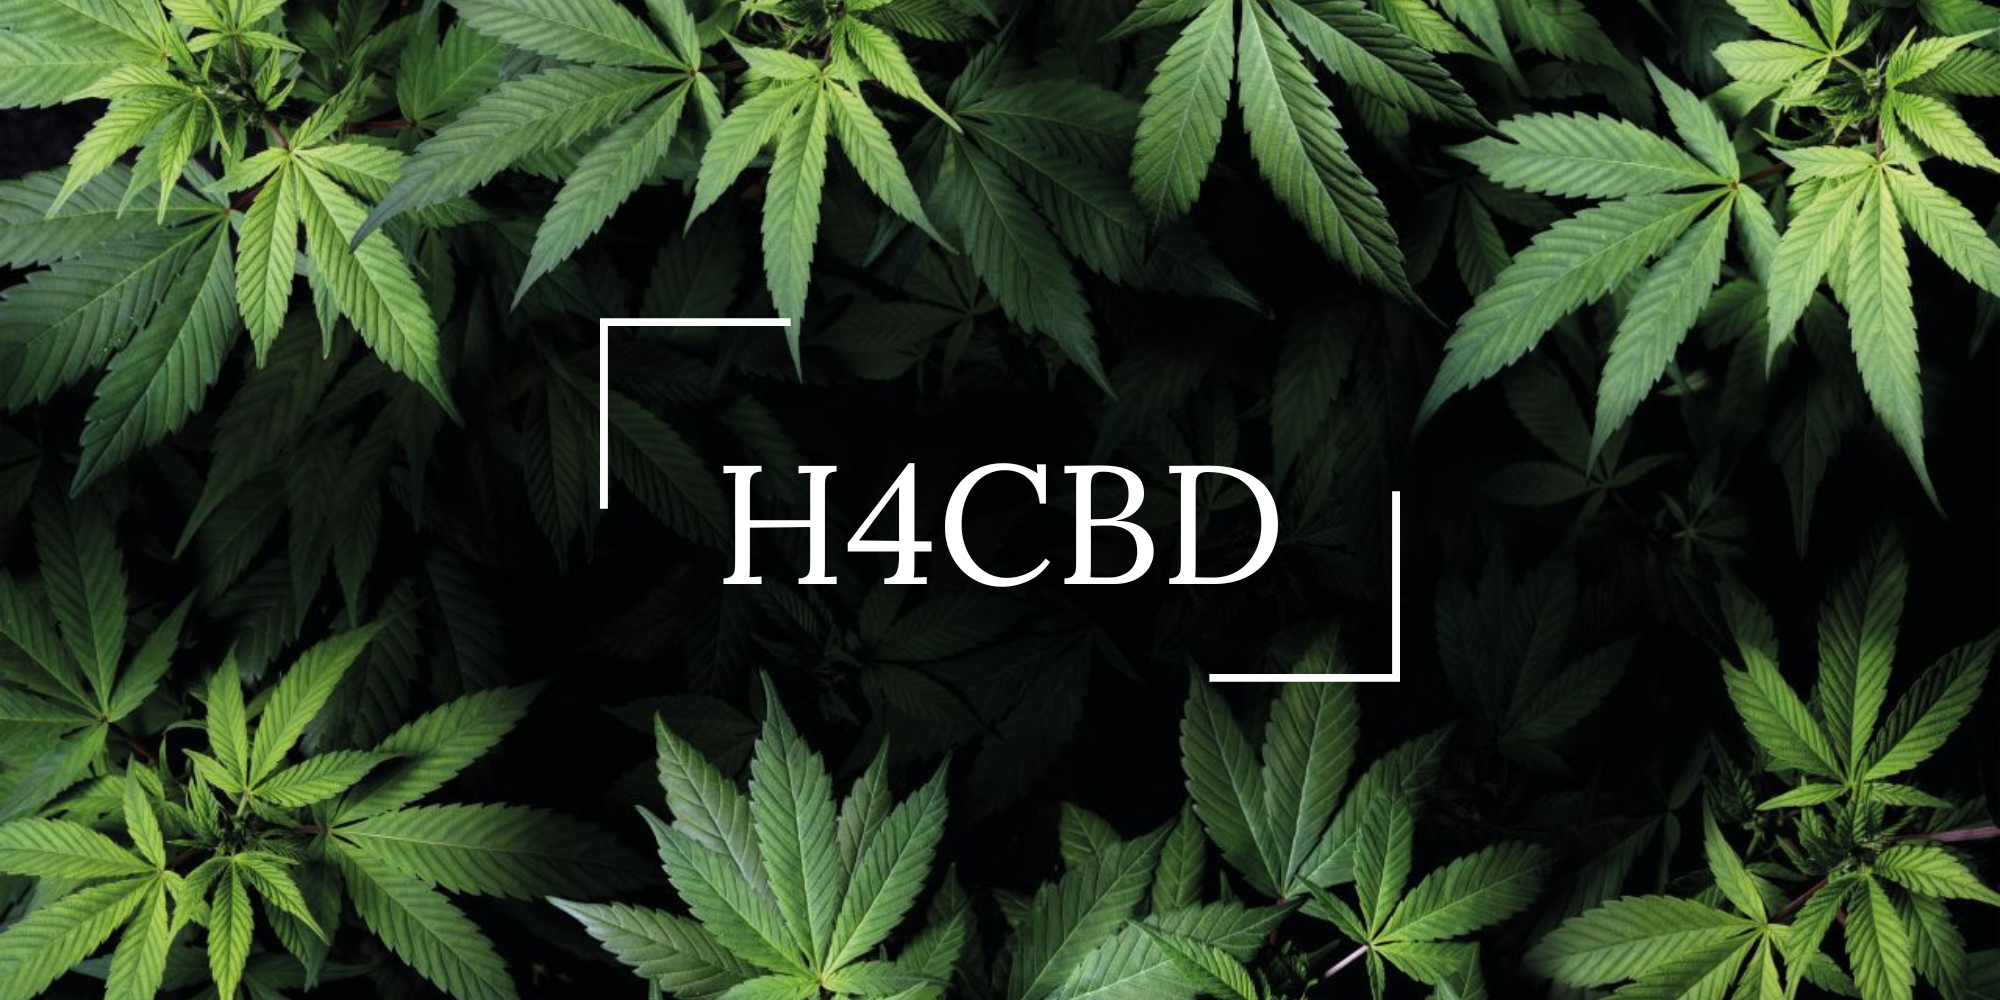 H4CBD: What is it?